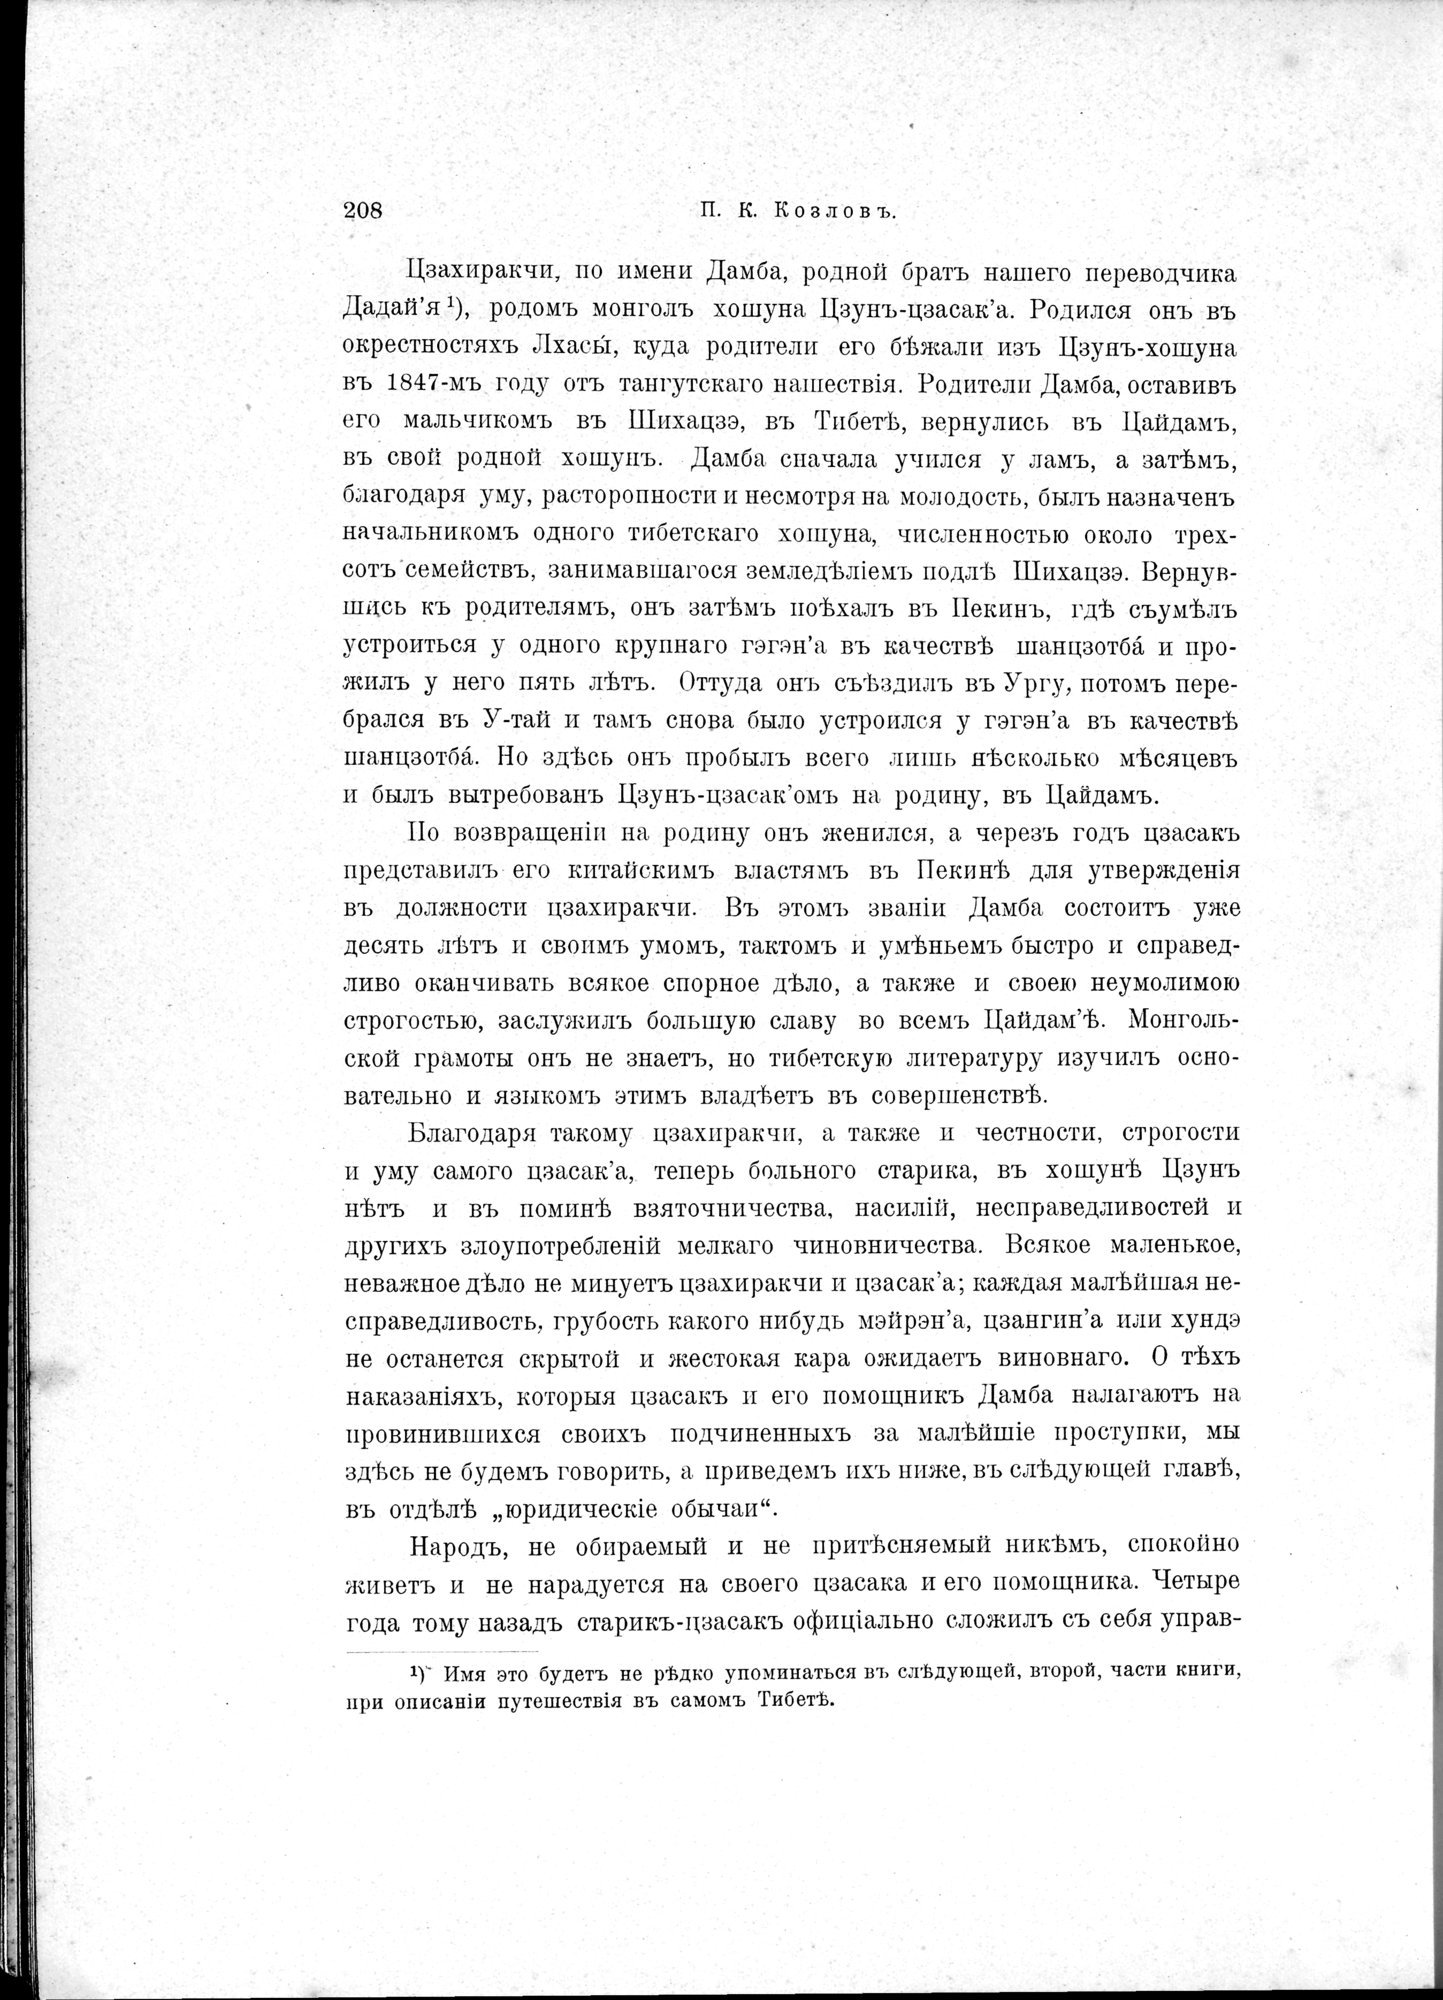 Mongoliia i Kam : vol.1 / Page 256 (Grayscale High Resolution Image)